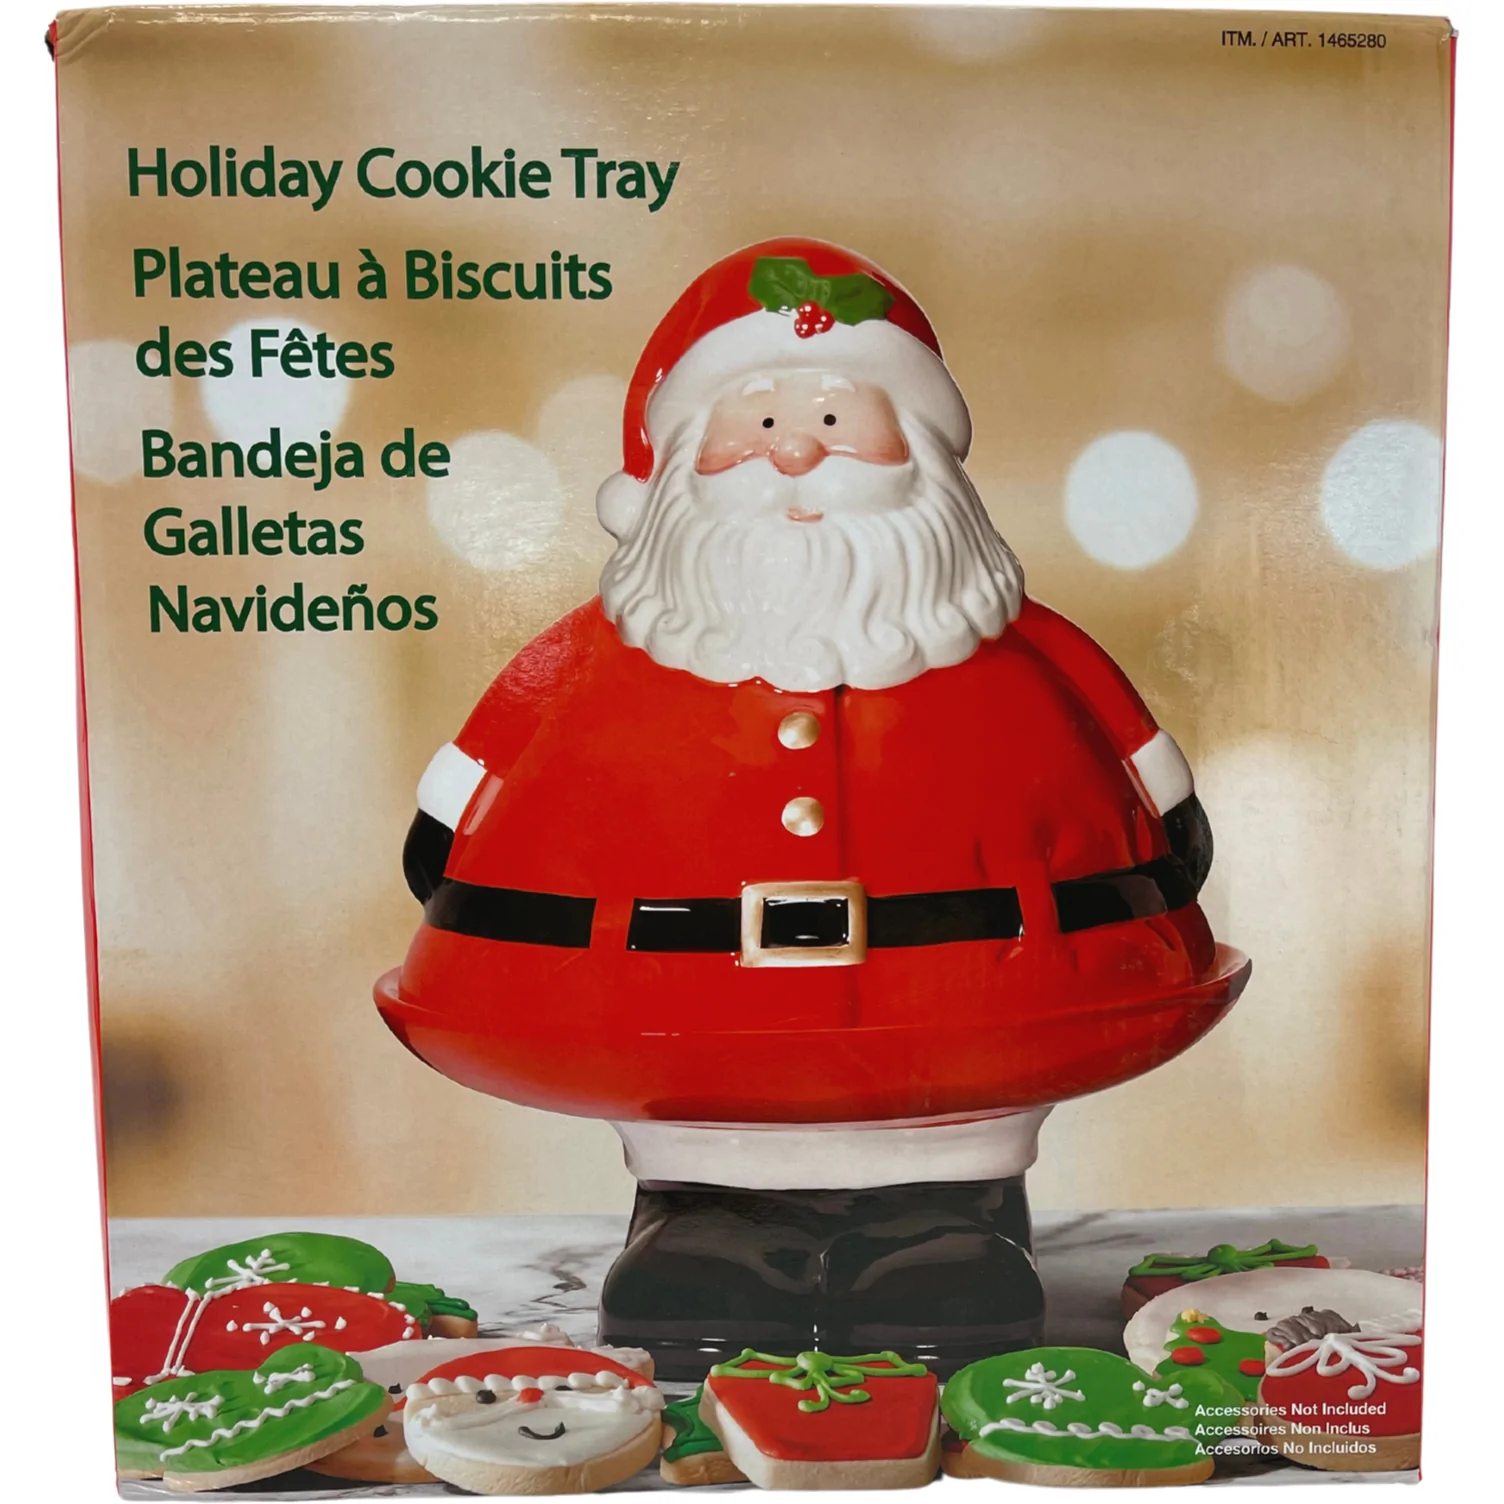 Holiday Cookie Tray / Santa Claus / 13" Tall / Christmas Baking Display Tray / Holiday Cookies **DEALS**